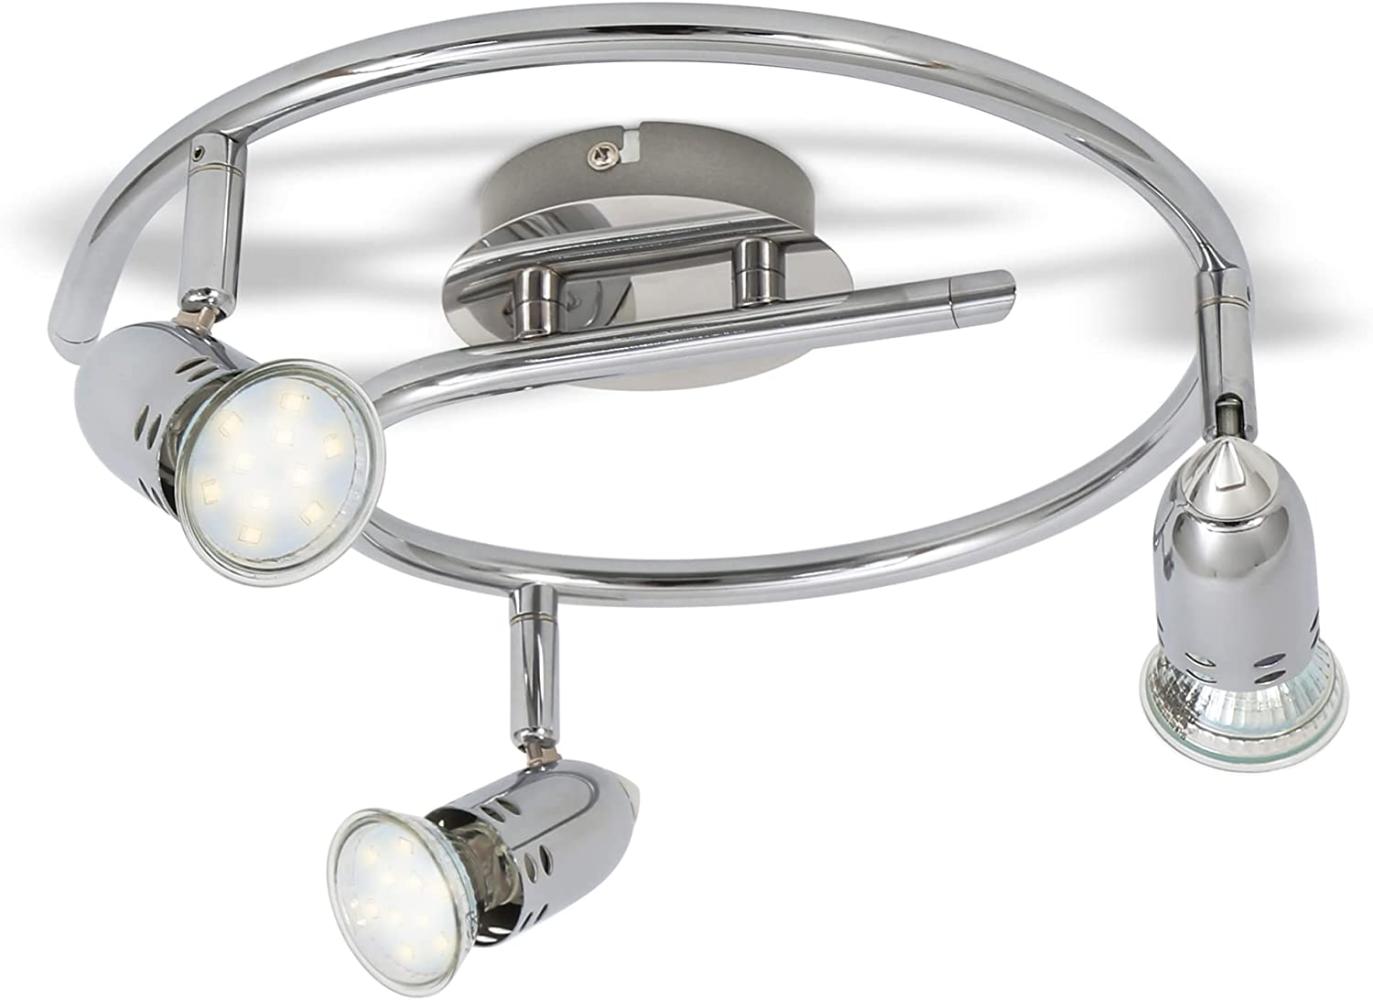 Design LED Deckenlampe 6W-12W Deckenlechte 230V Spot-Strahler GU10 modern chrom 3 Strahler [Spirale] Bild 1